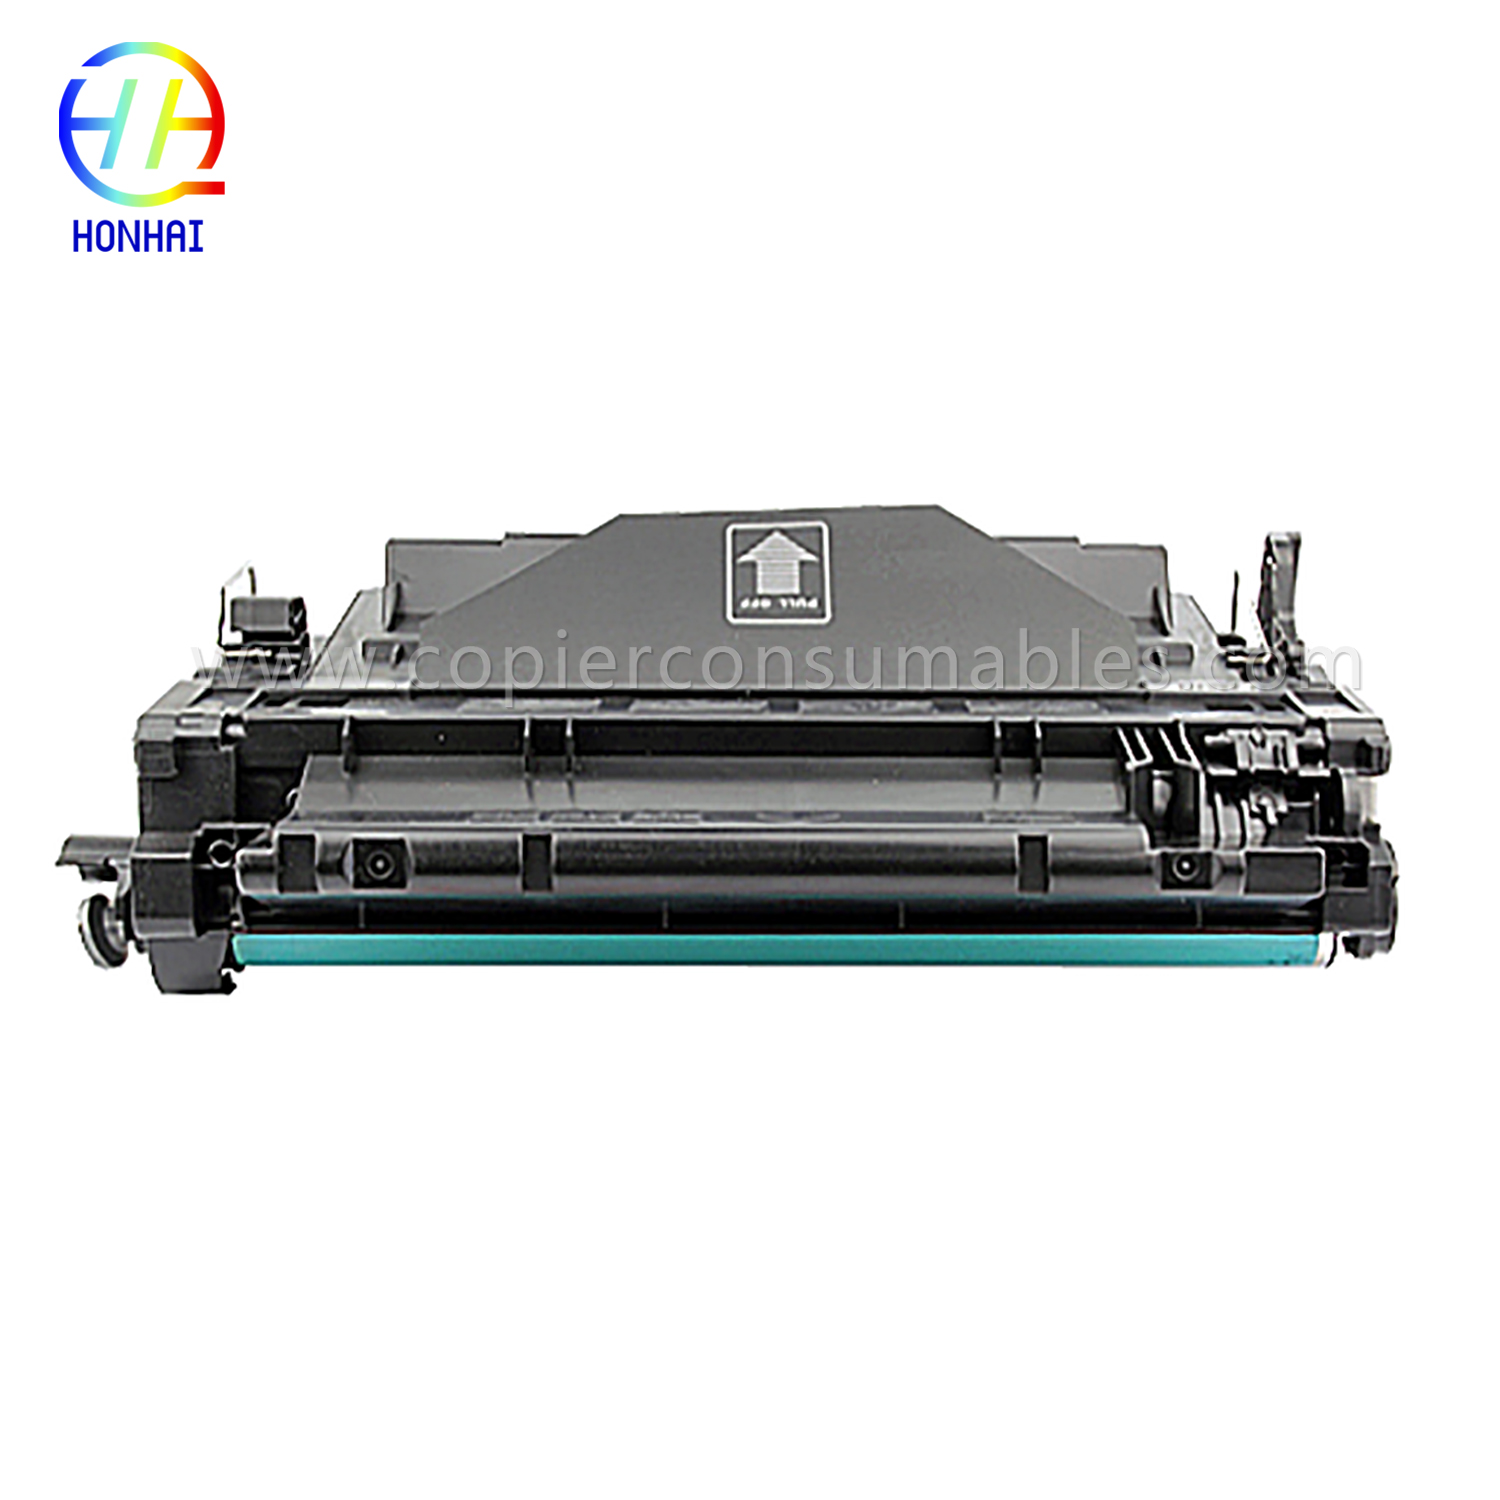 کارتریج تونر رنگی برای HP LaserJet Pro MFP M521dn Enterprise P3015 CE255X